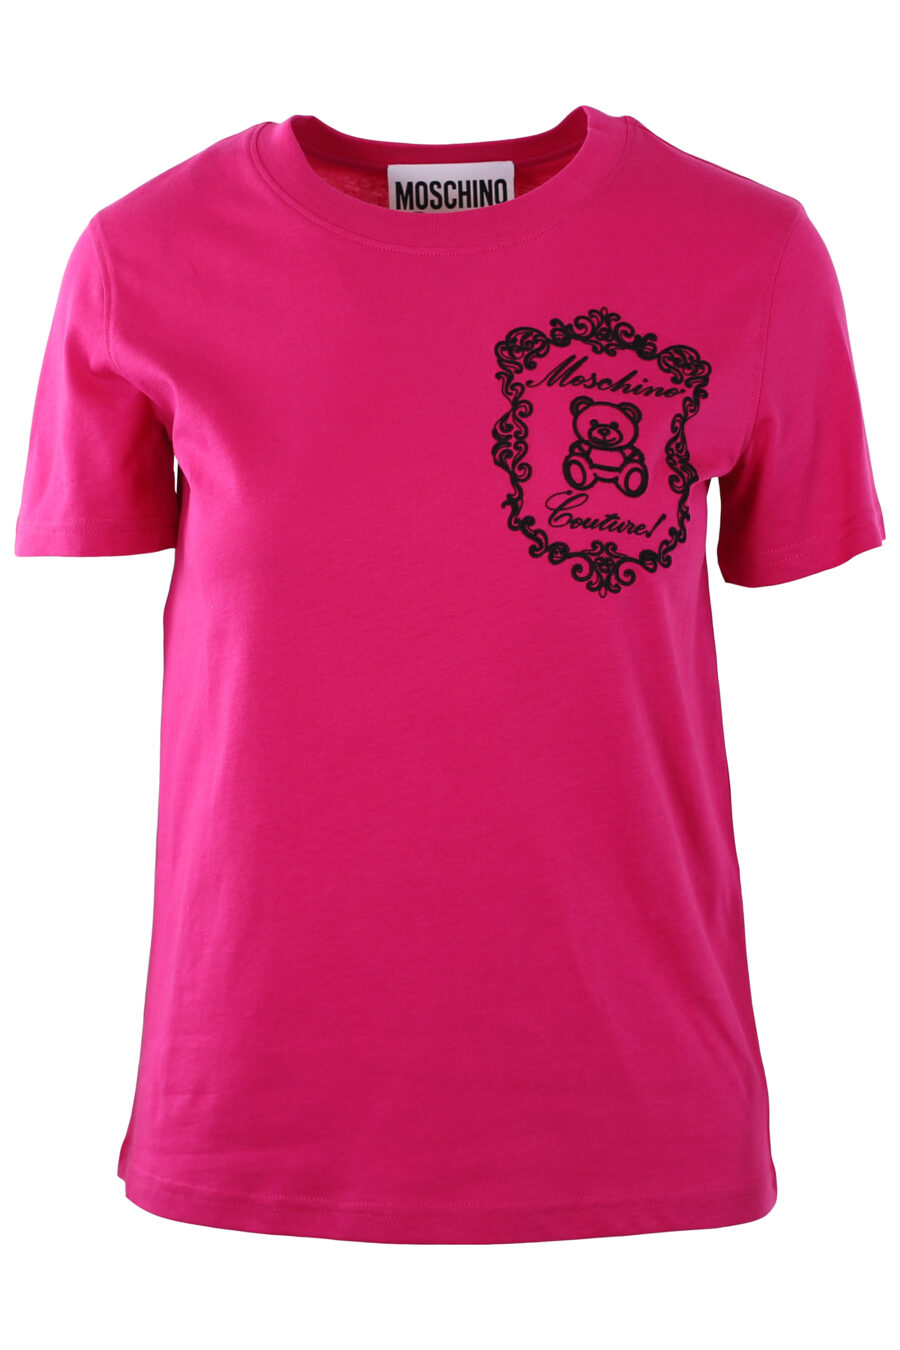 T-shirt fuchsia avec logo du bouclier de l'ours - IMG 0244